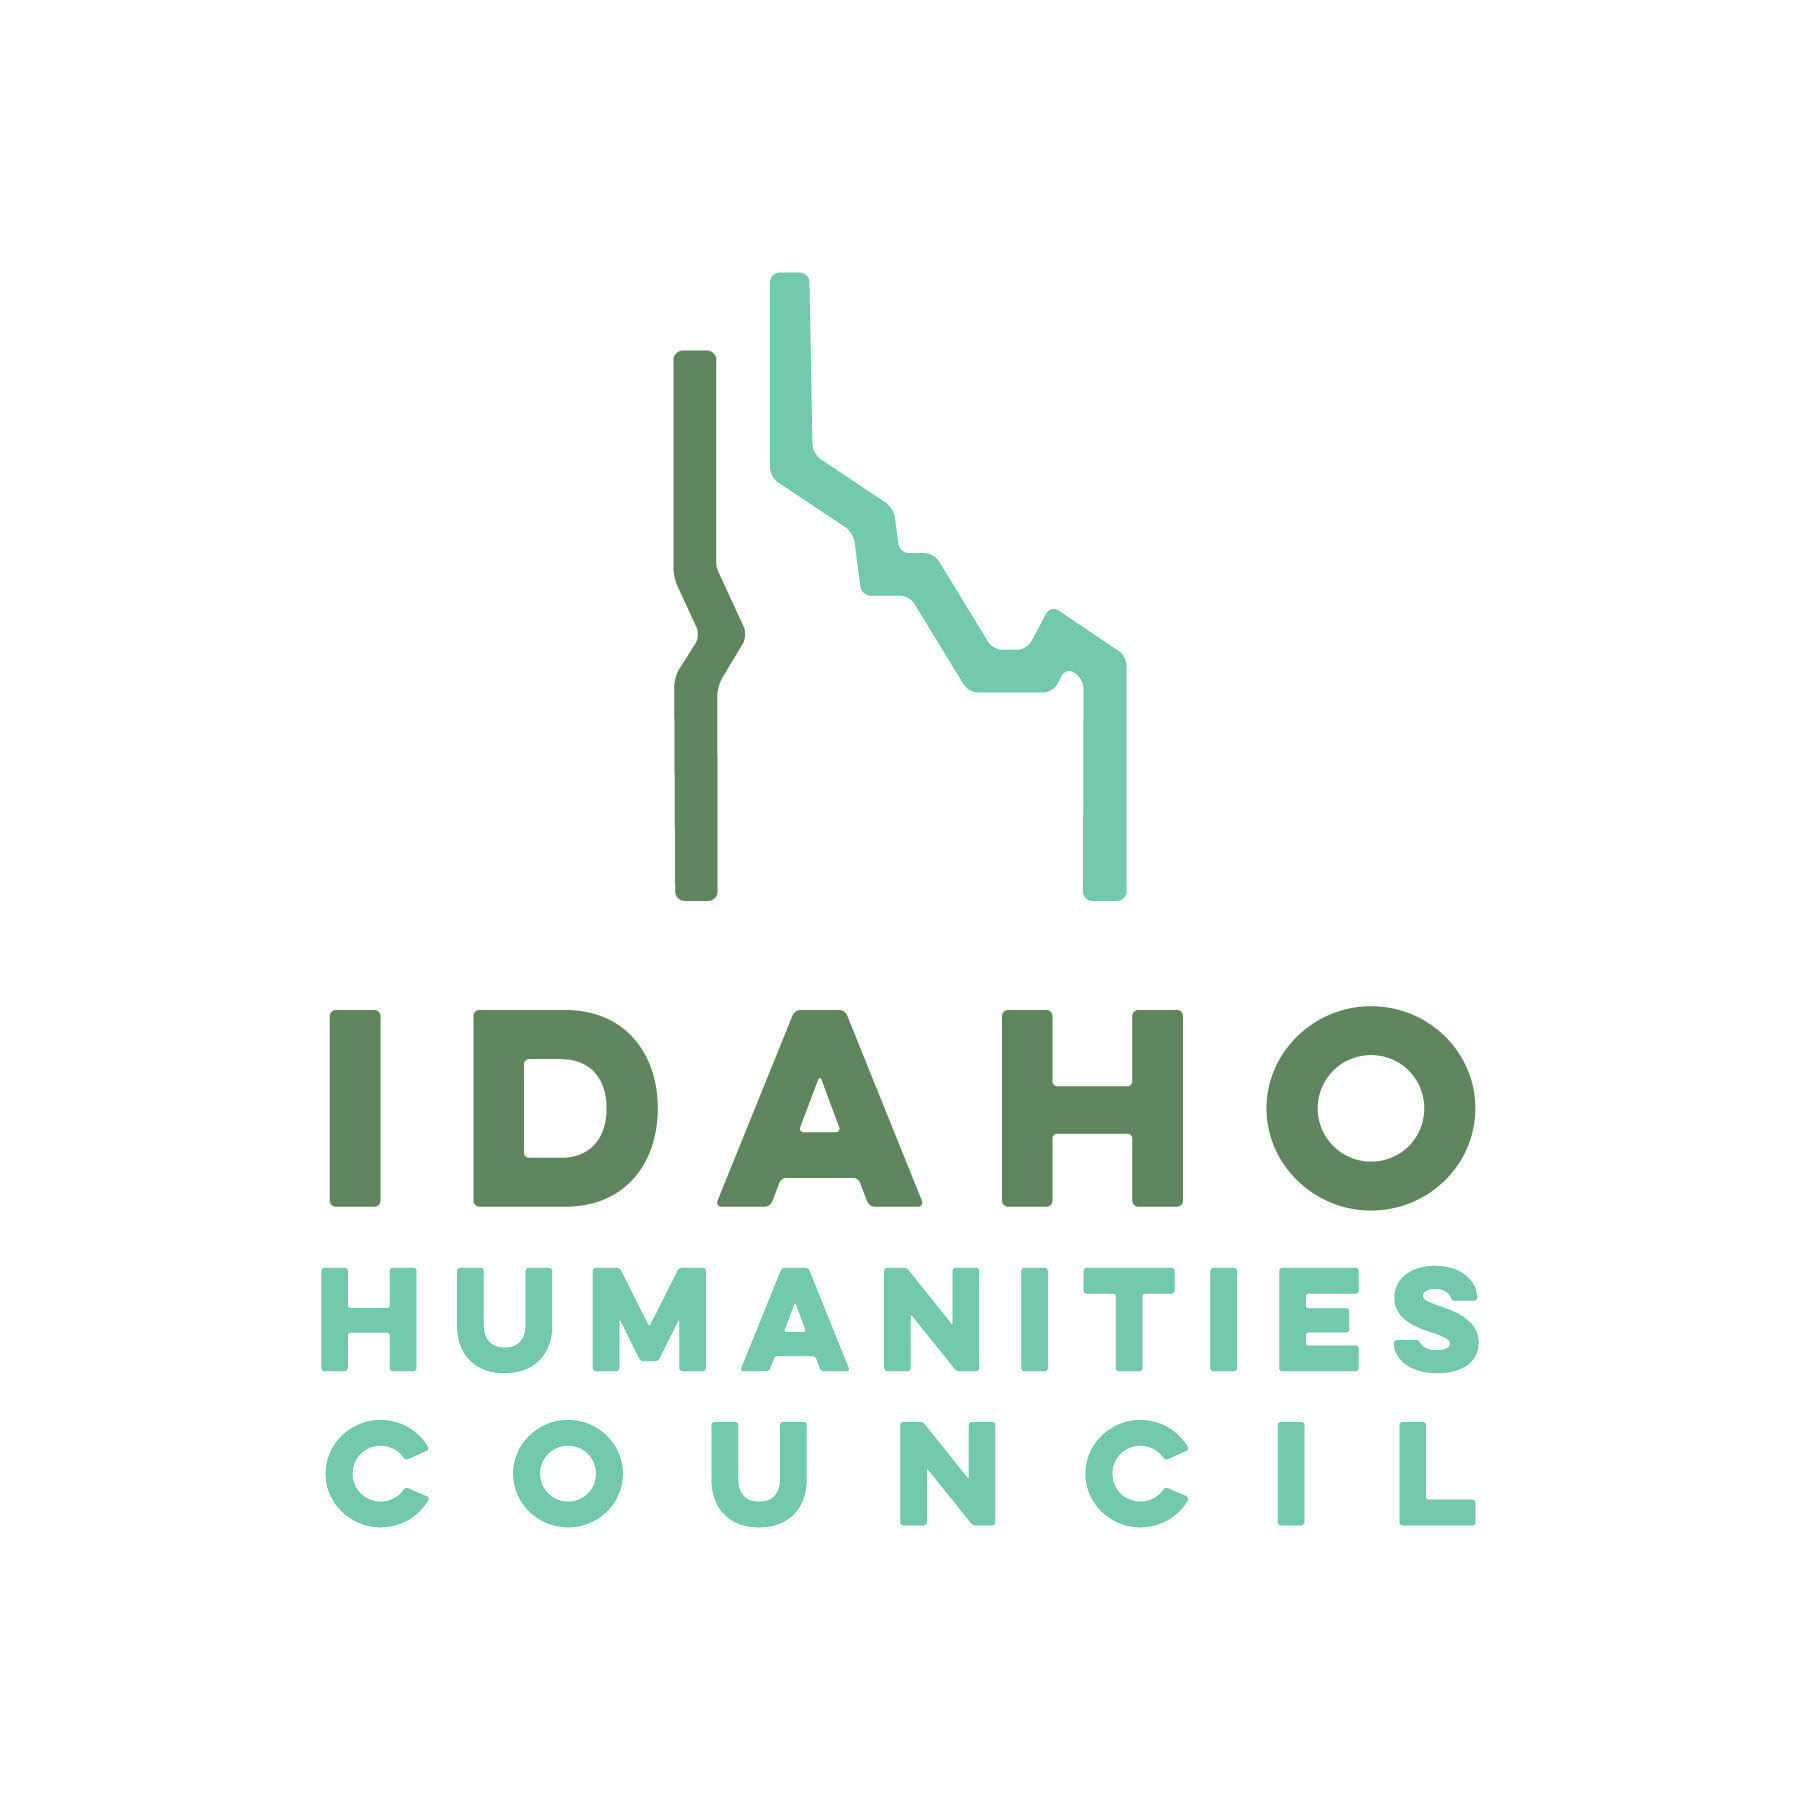 Council Logo - IHC Logos - Idaho Humanities Council